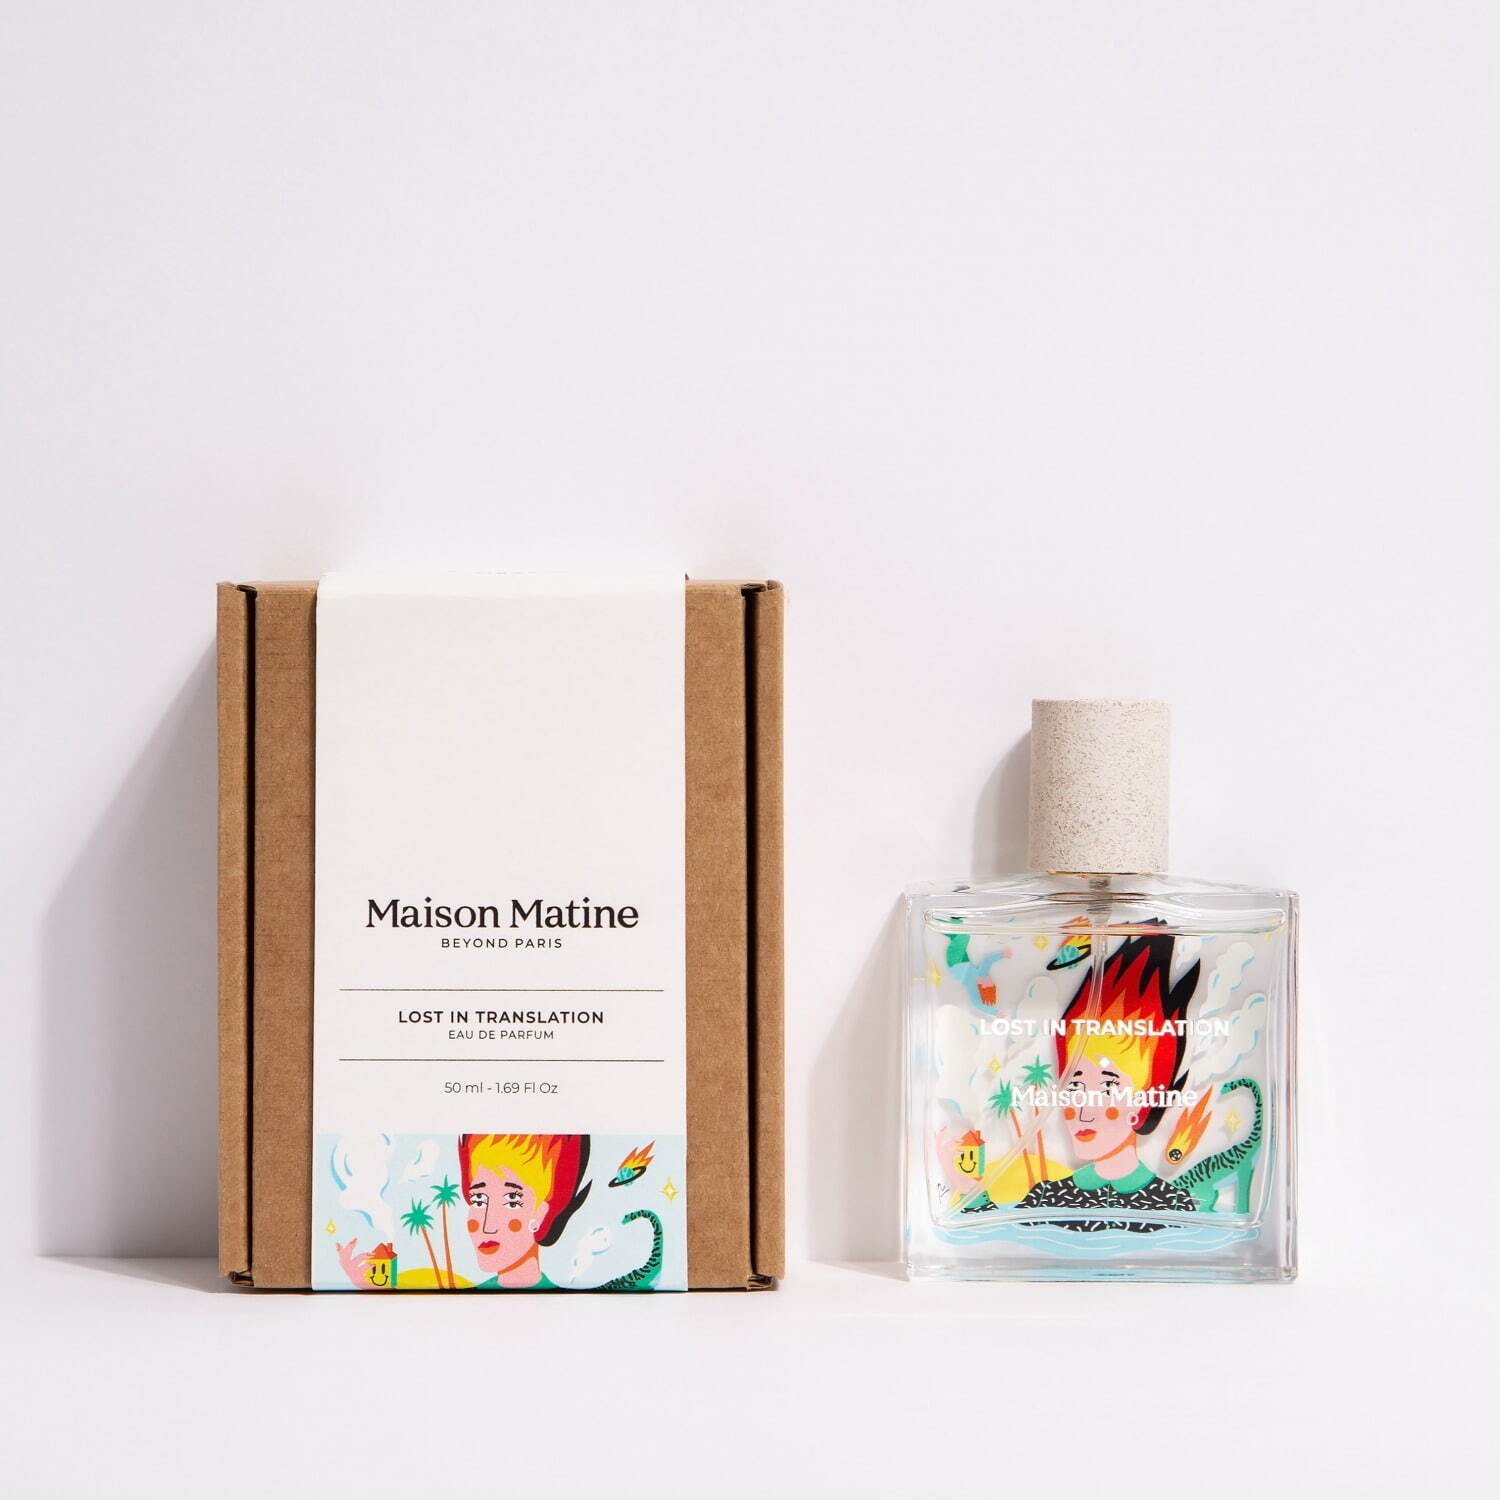 Maison Matine fragrance lost in translation